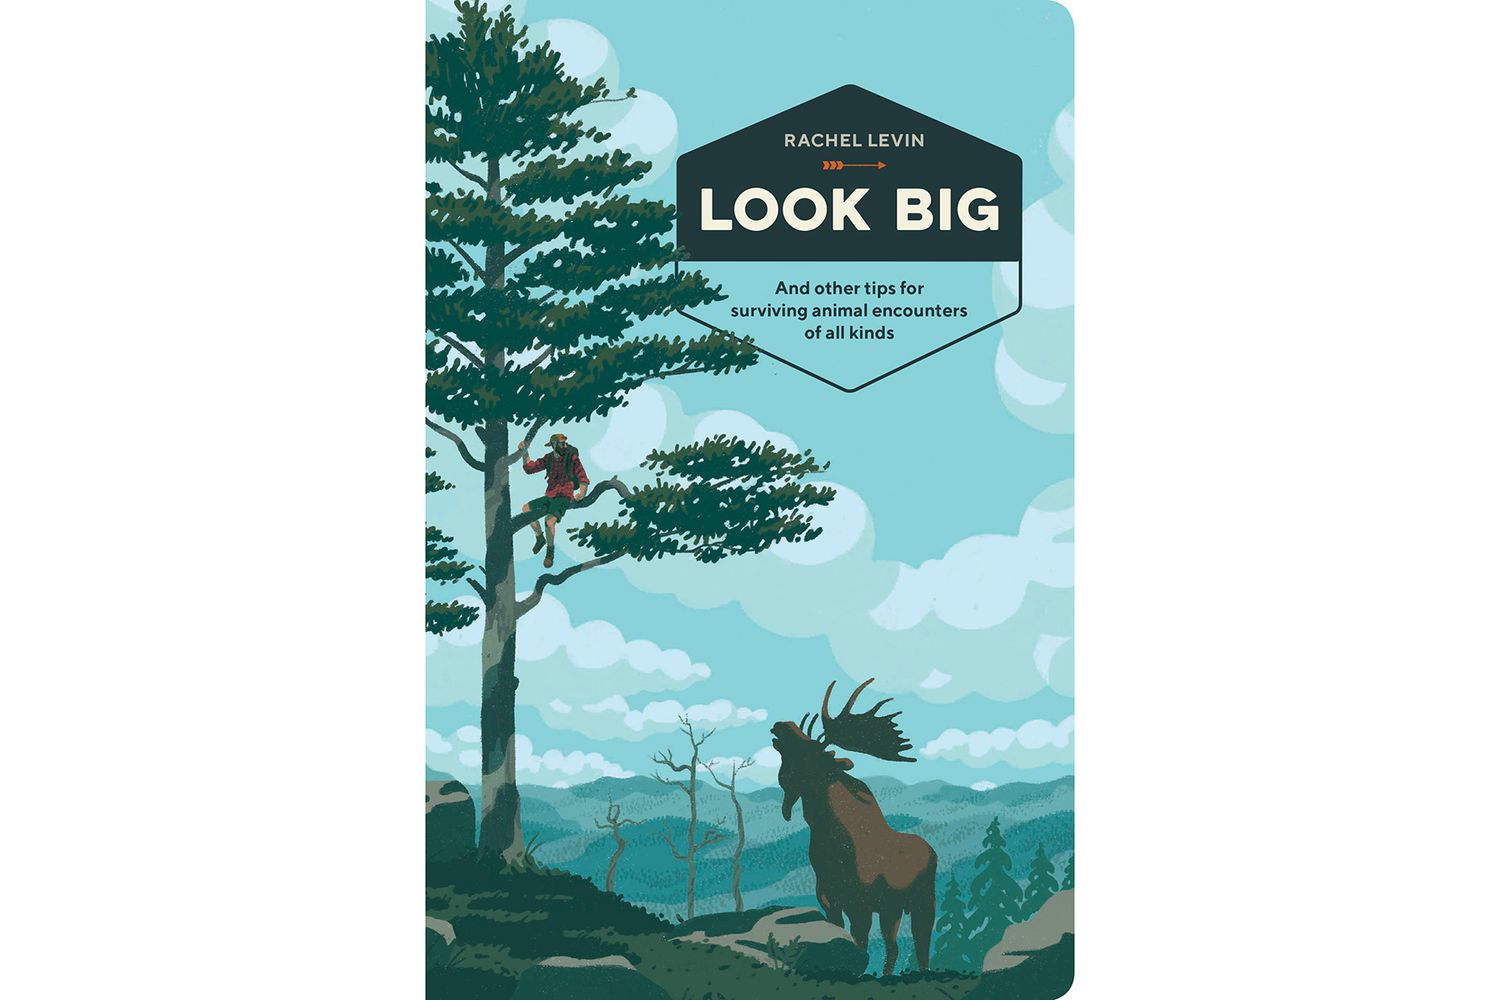 Cover of Look Big, by Rachel Levin